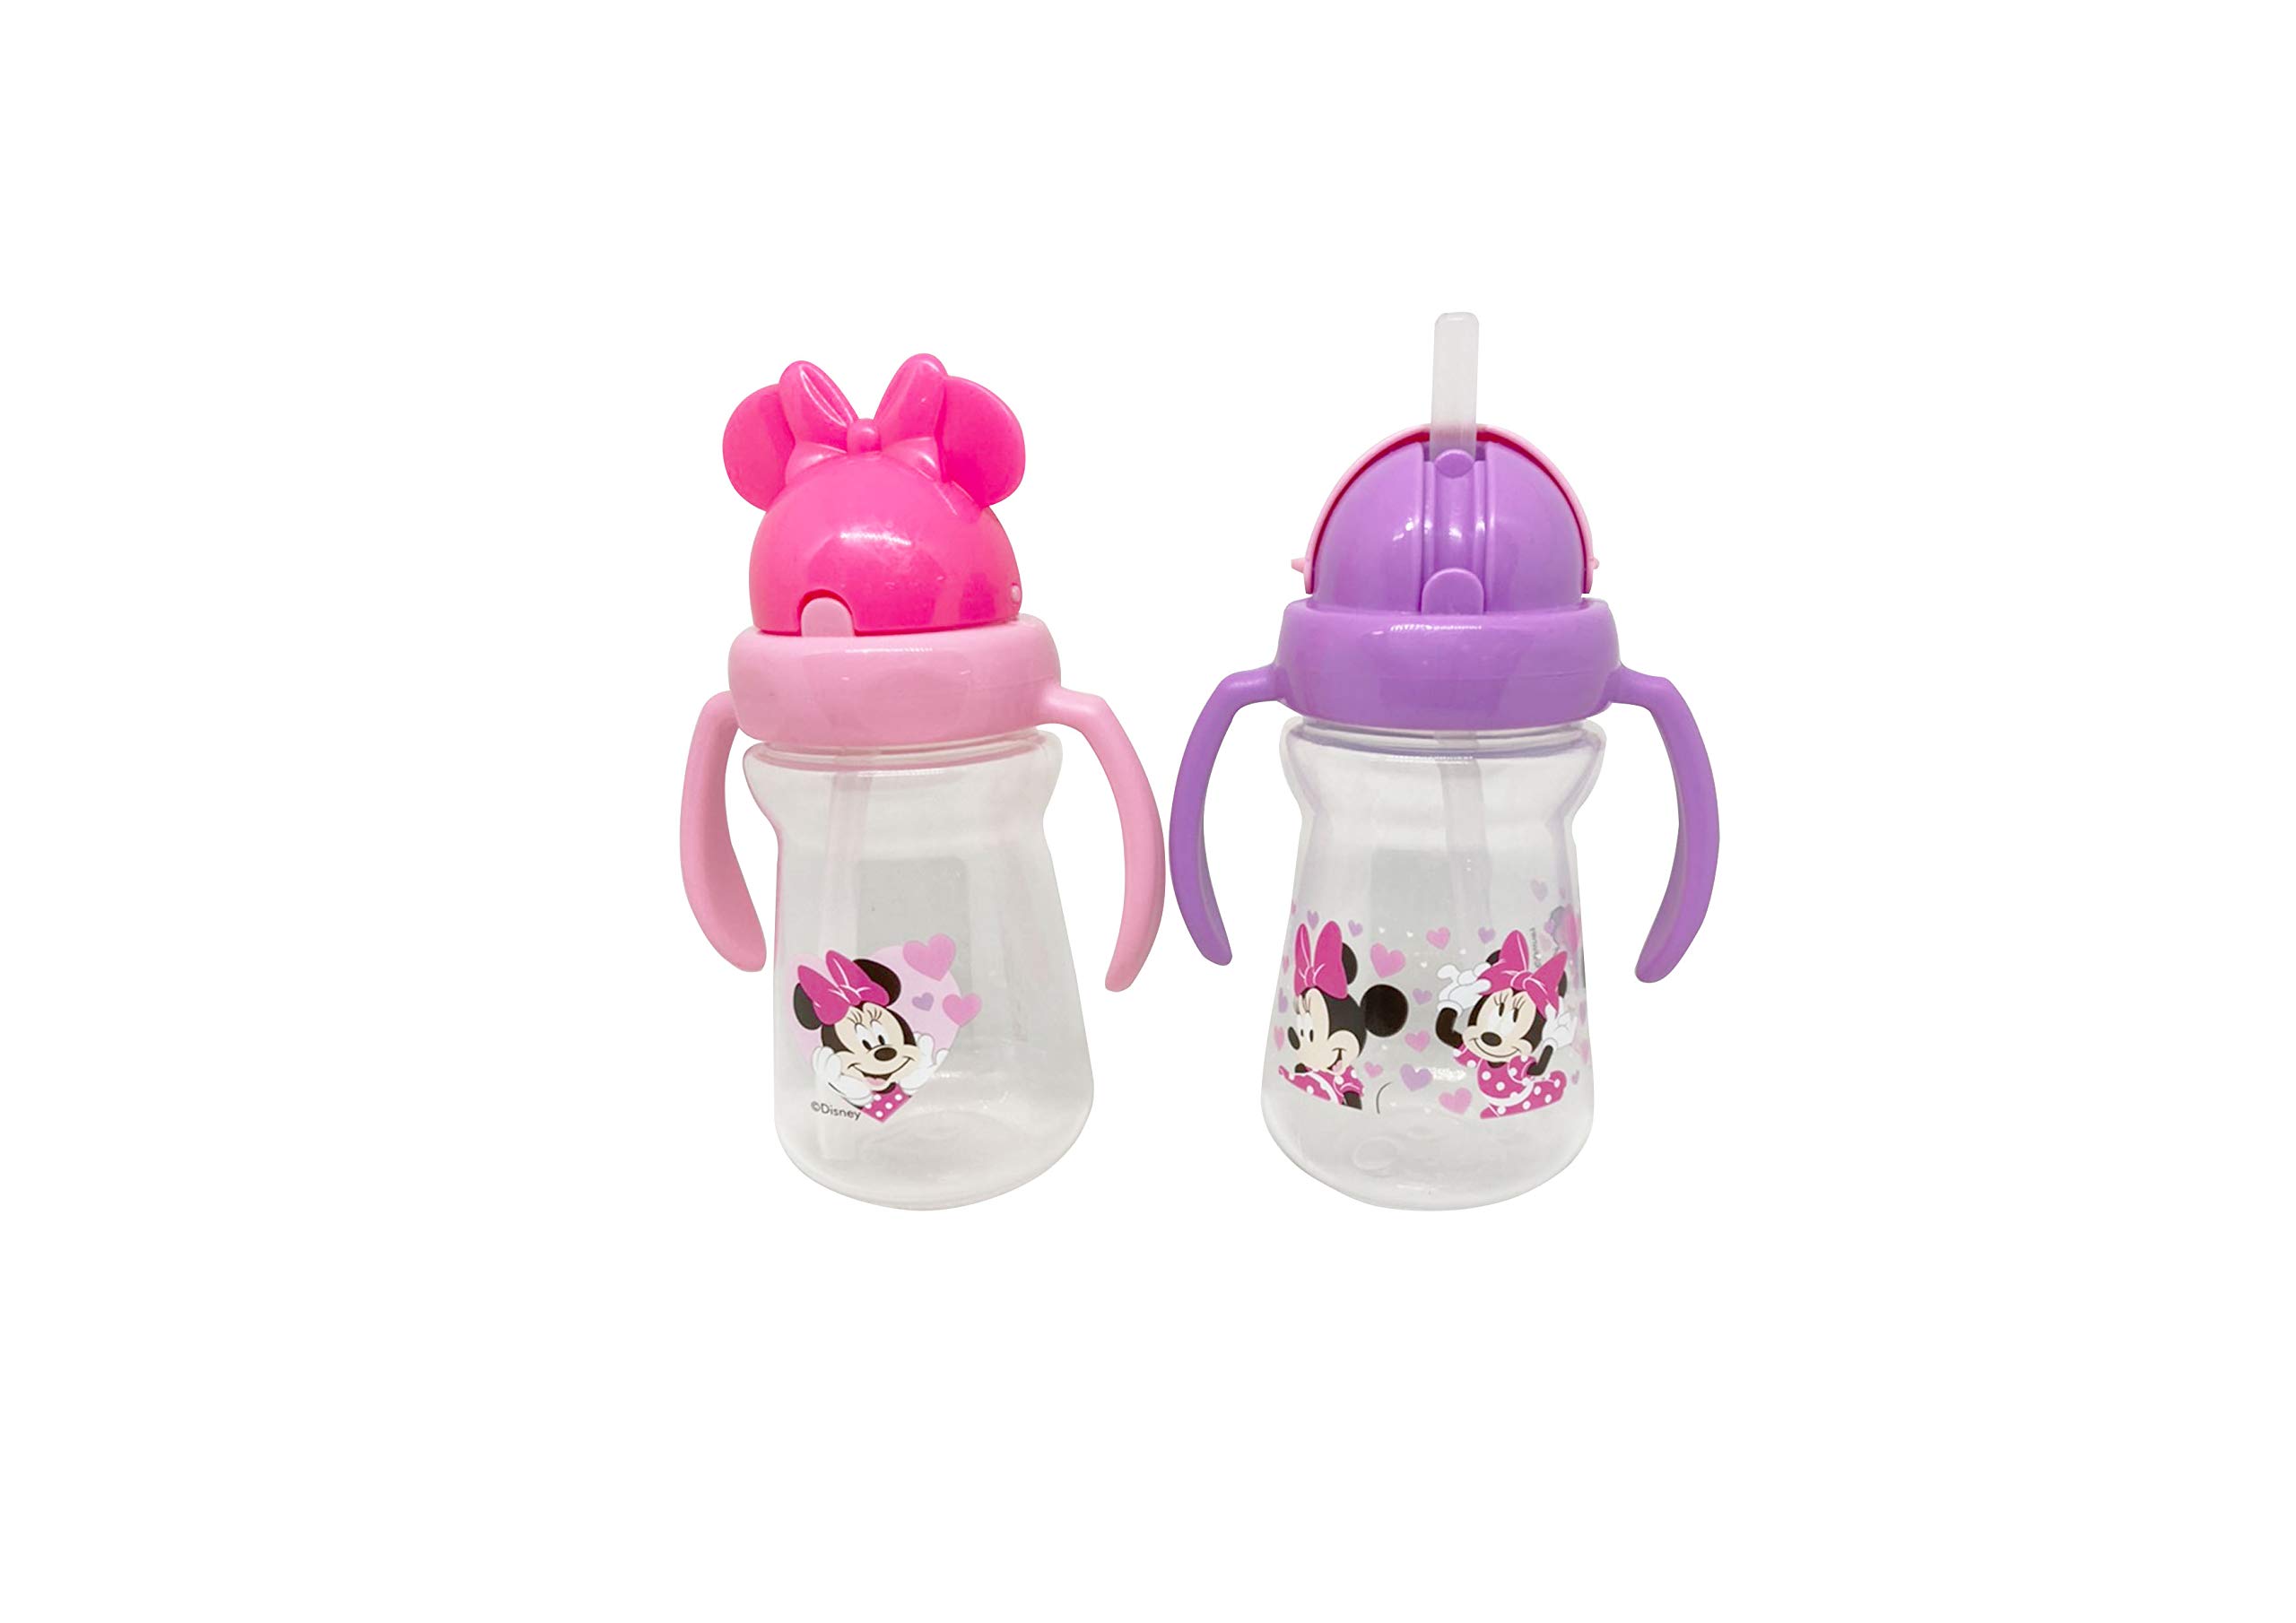 Disney Minnie Mouse Cup, Bottle Minnie Mouse